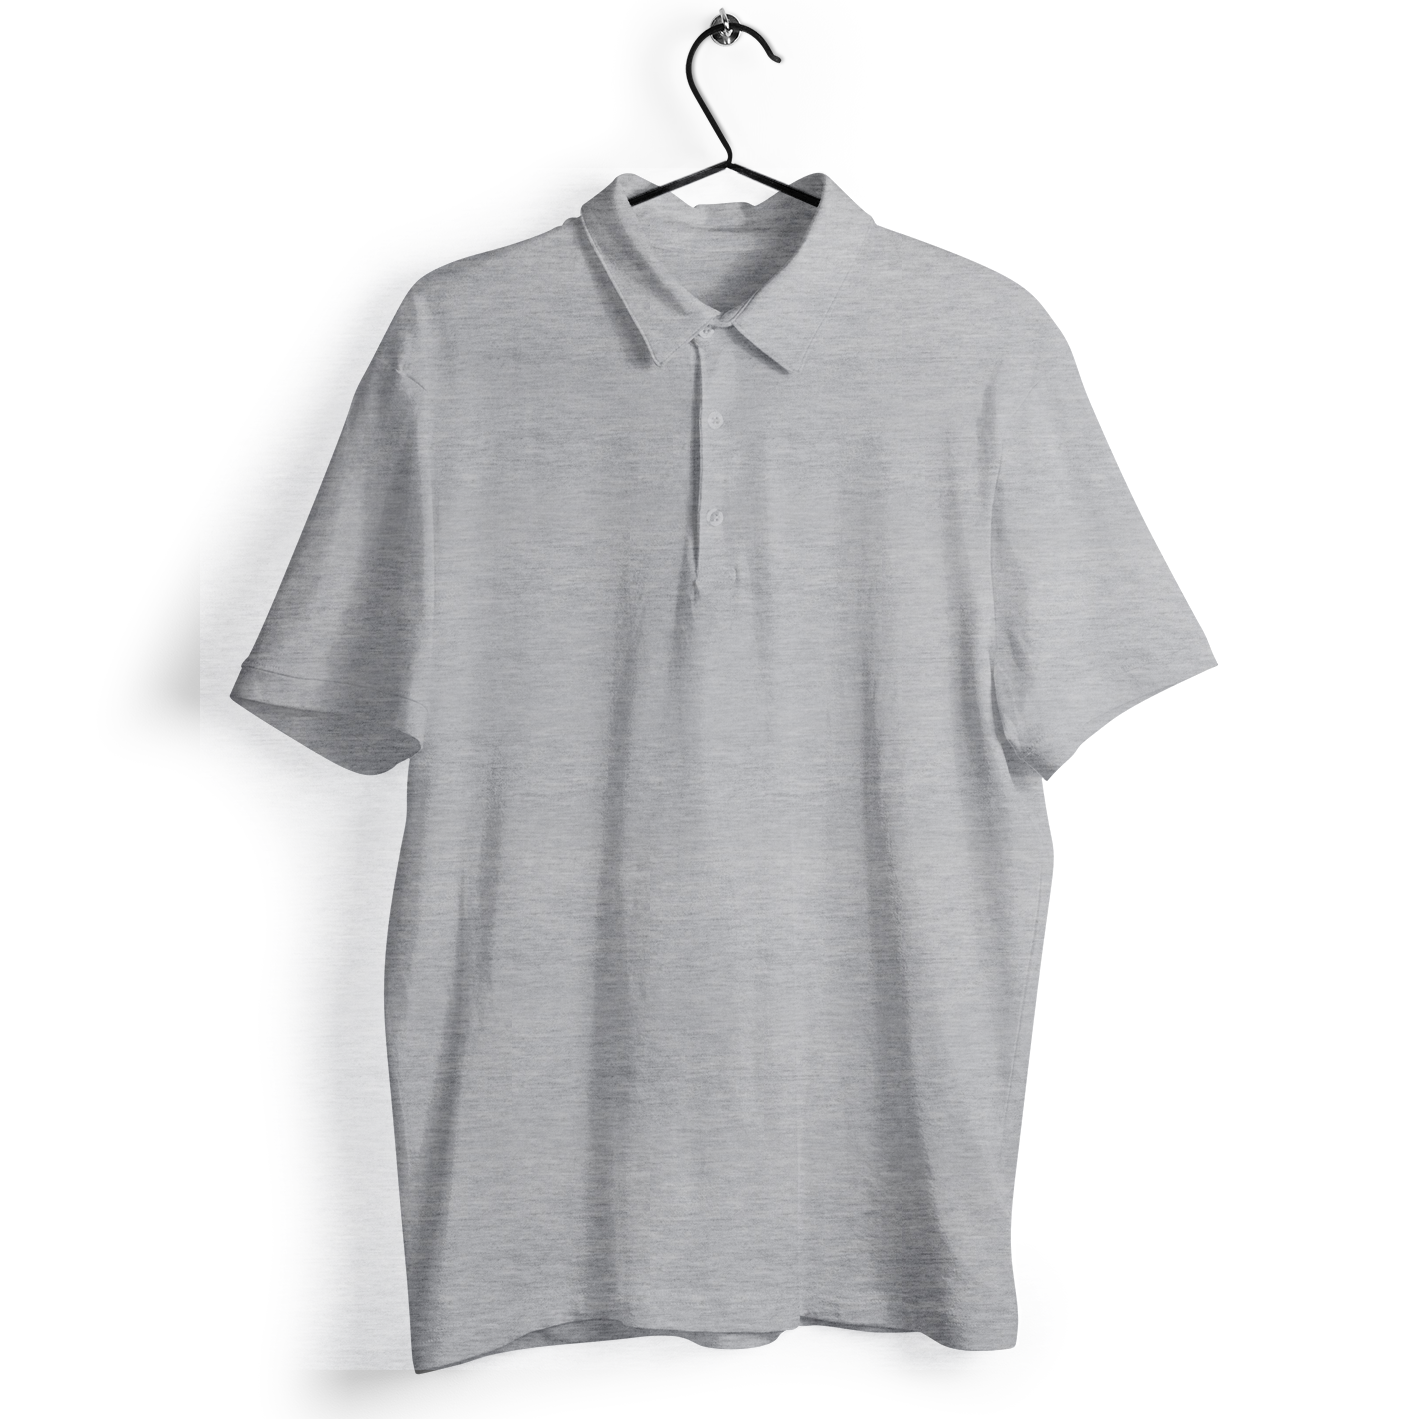 Grey Melange Polo T-shirt The Banyan Tee